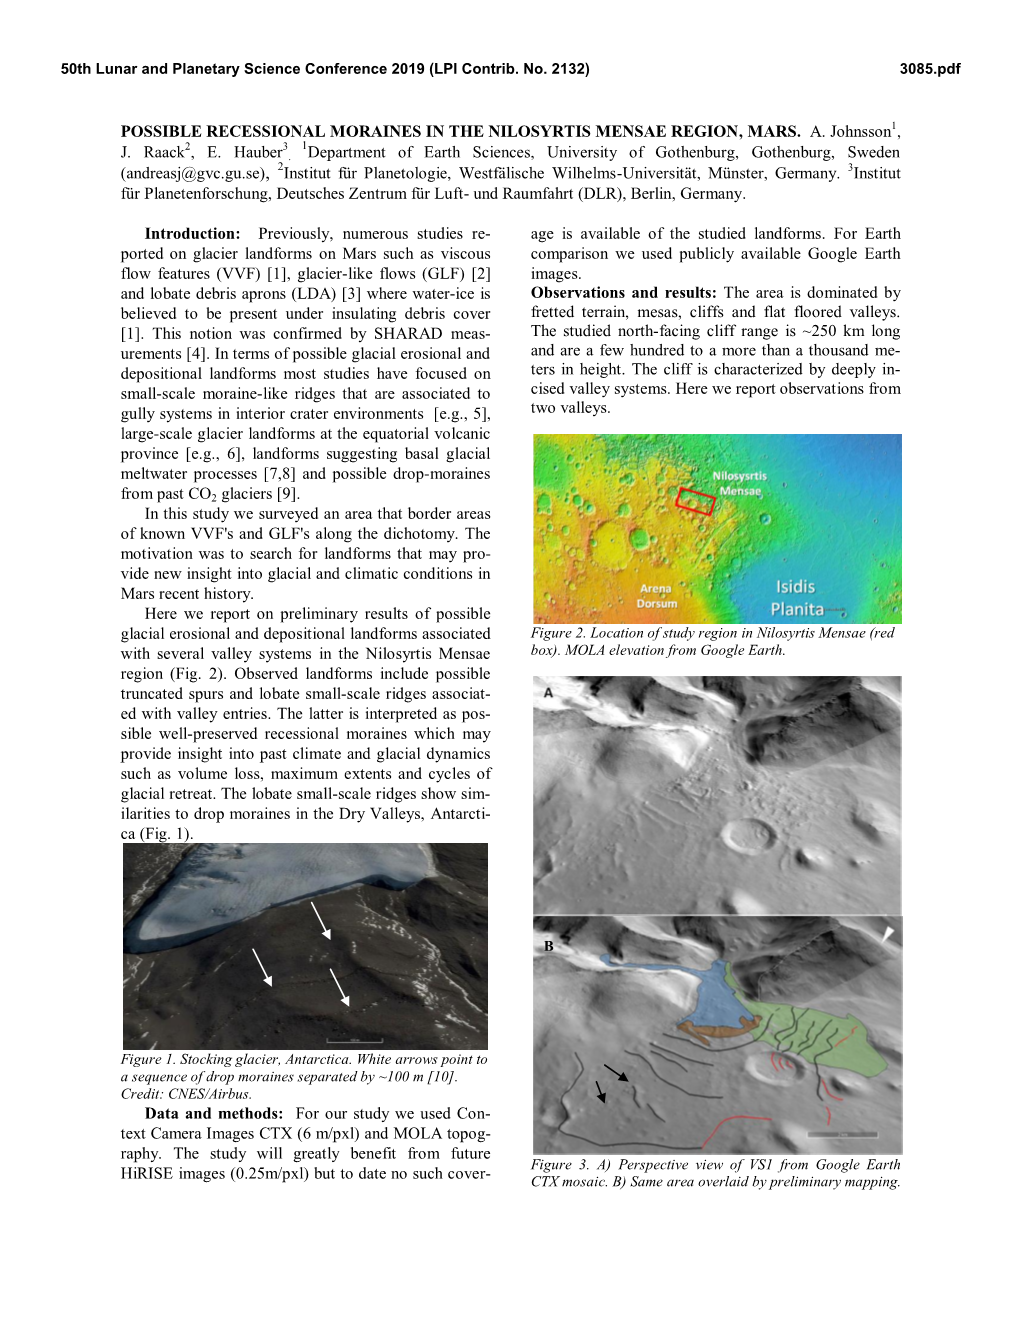 Possible Recessional Moraines in the Nilosyrtis Mensae Region, Mars